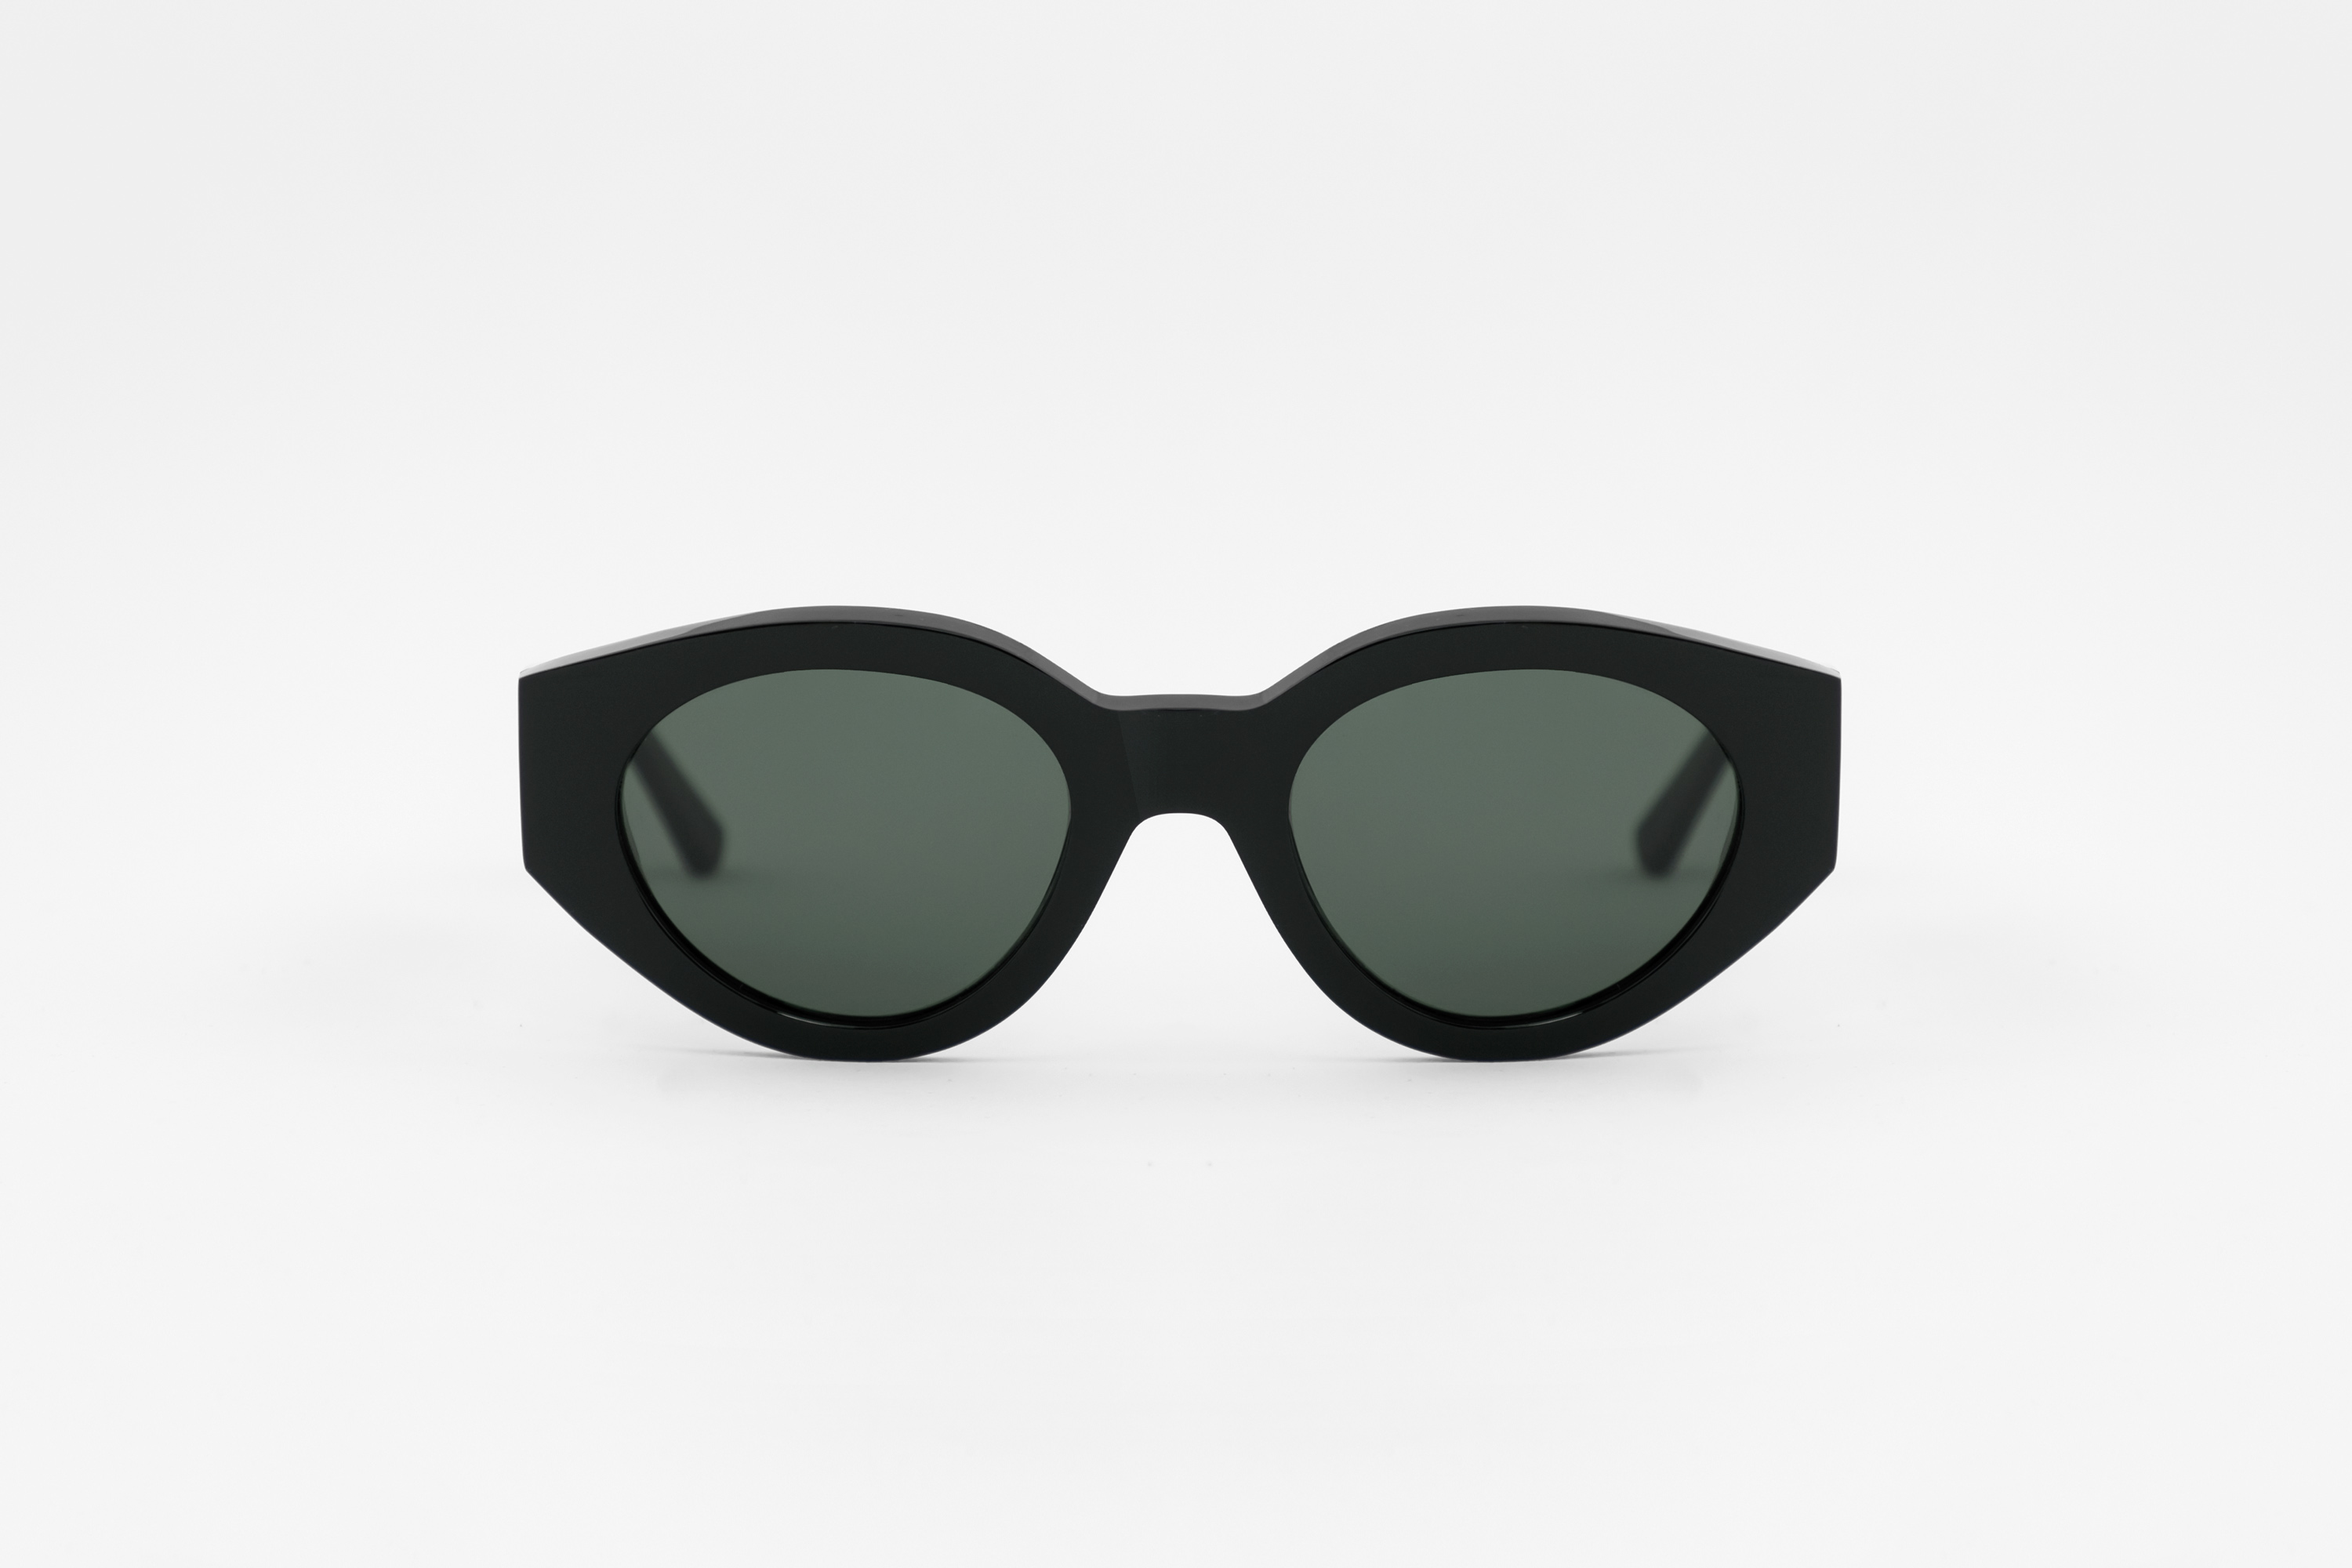 Monokel Eyewear Polly Black Sunglasses